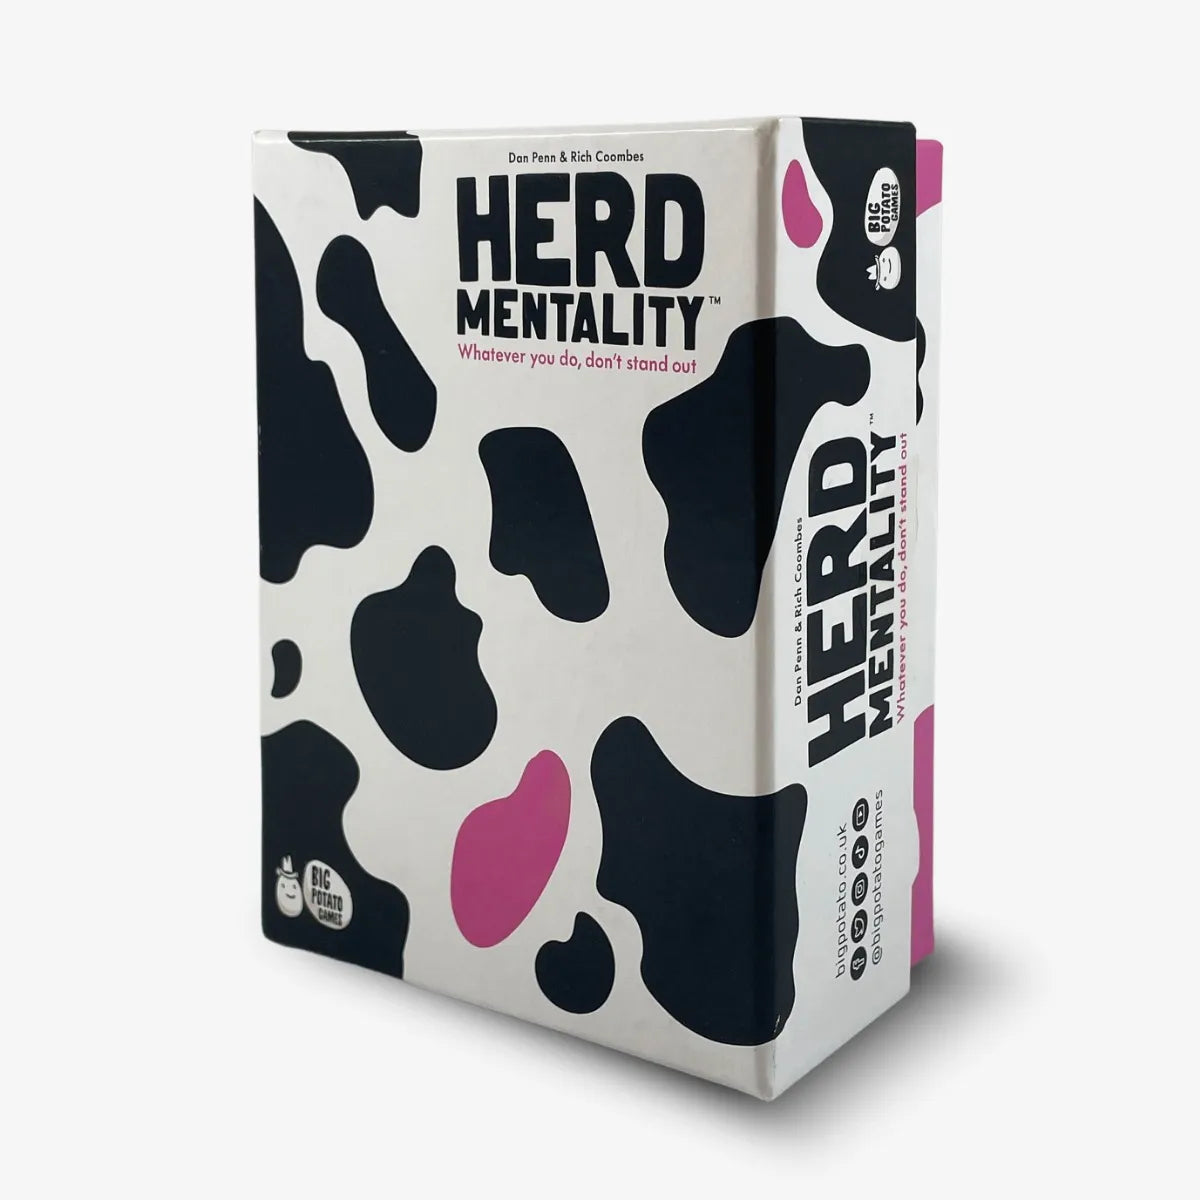 Herd Mentality Mini Game